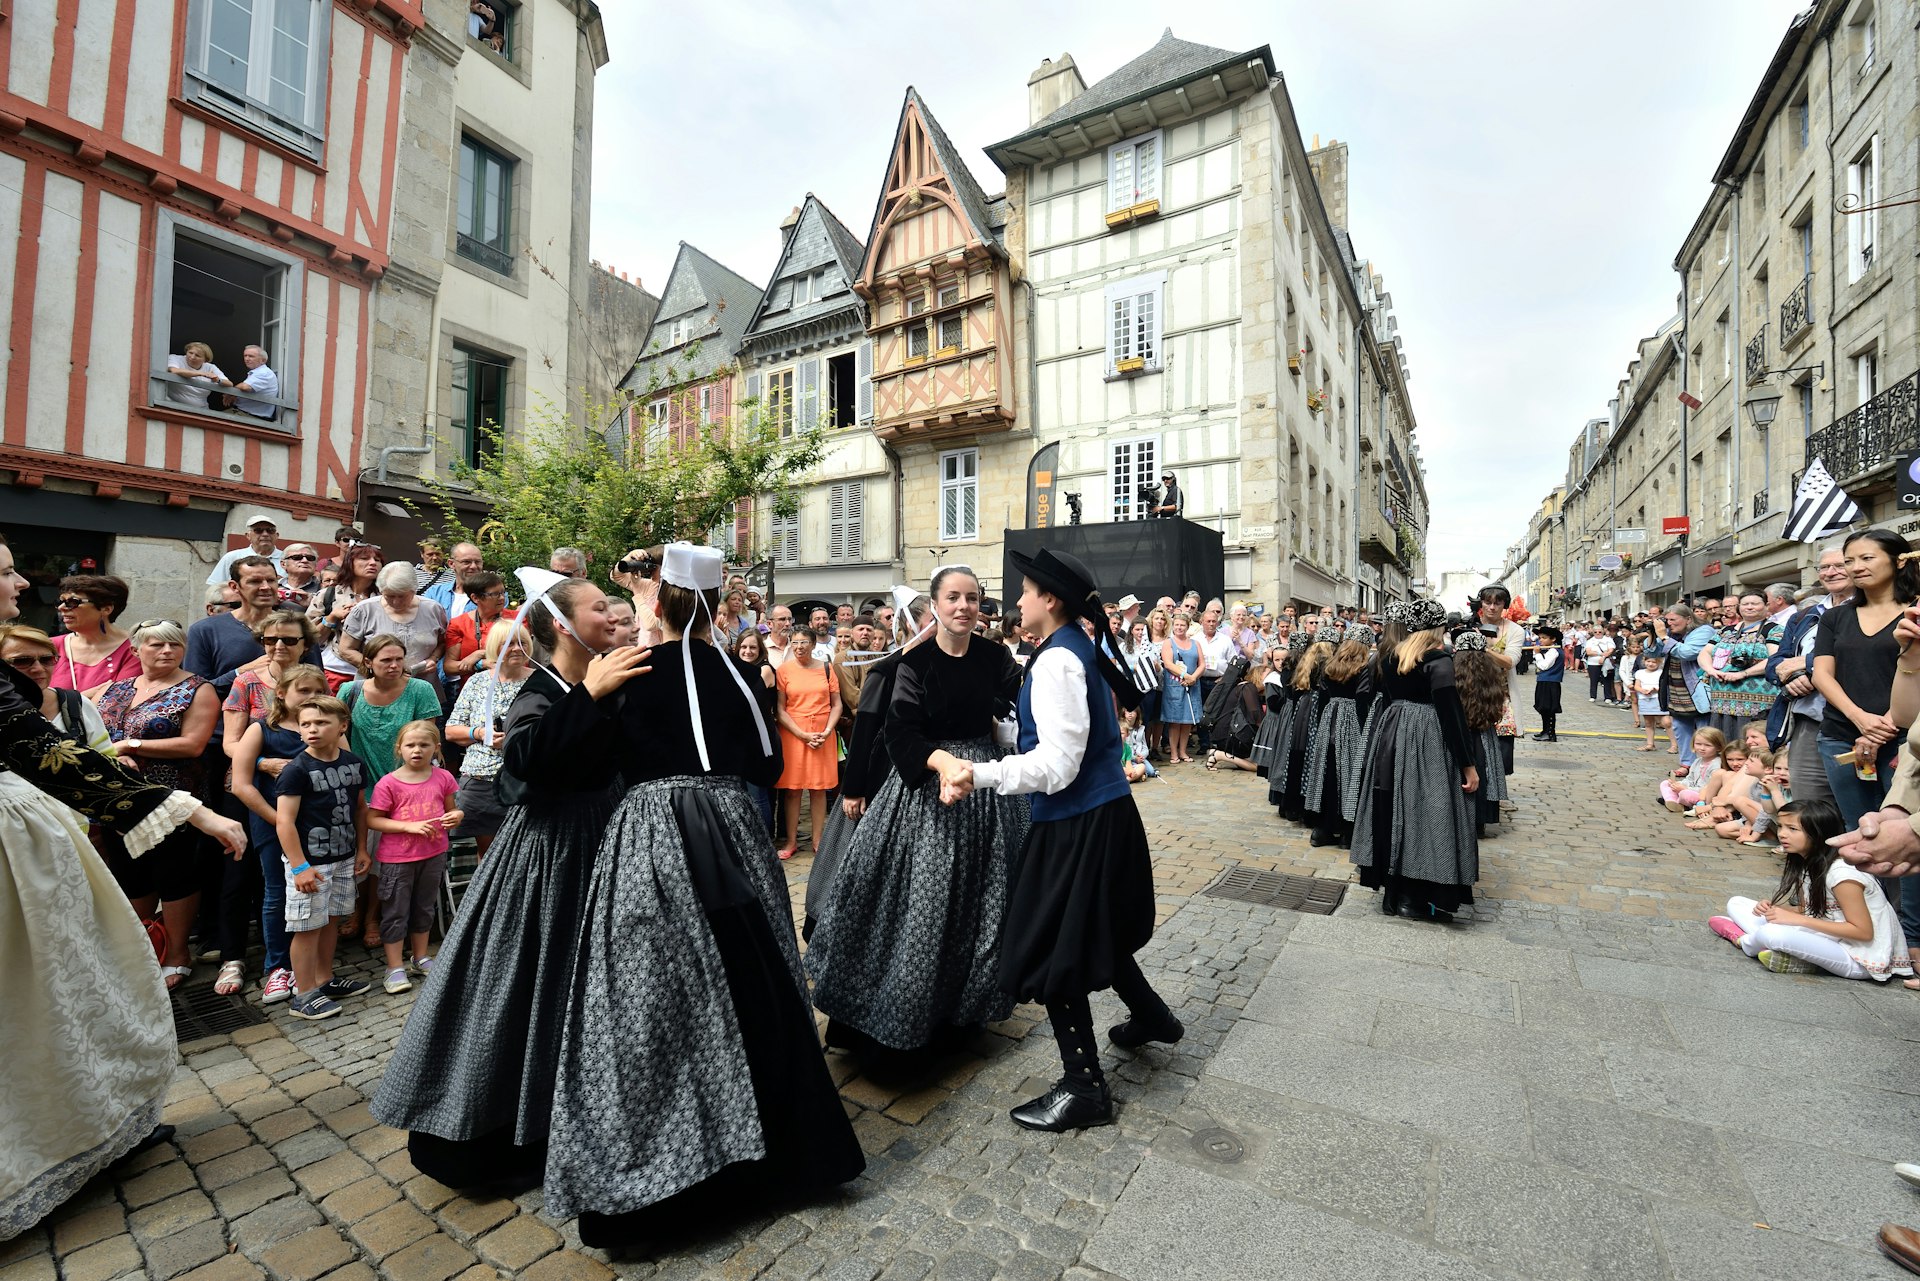 Participants in traditional Breton dress dance at the festival de Cornouailles, Quimper, Brittany France